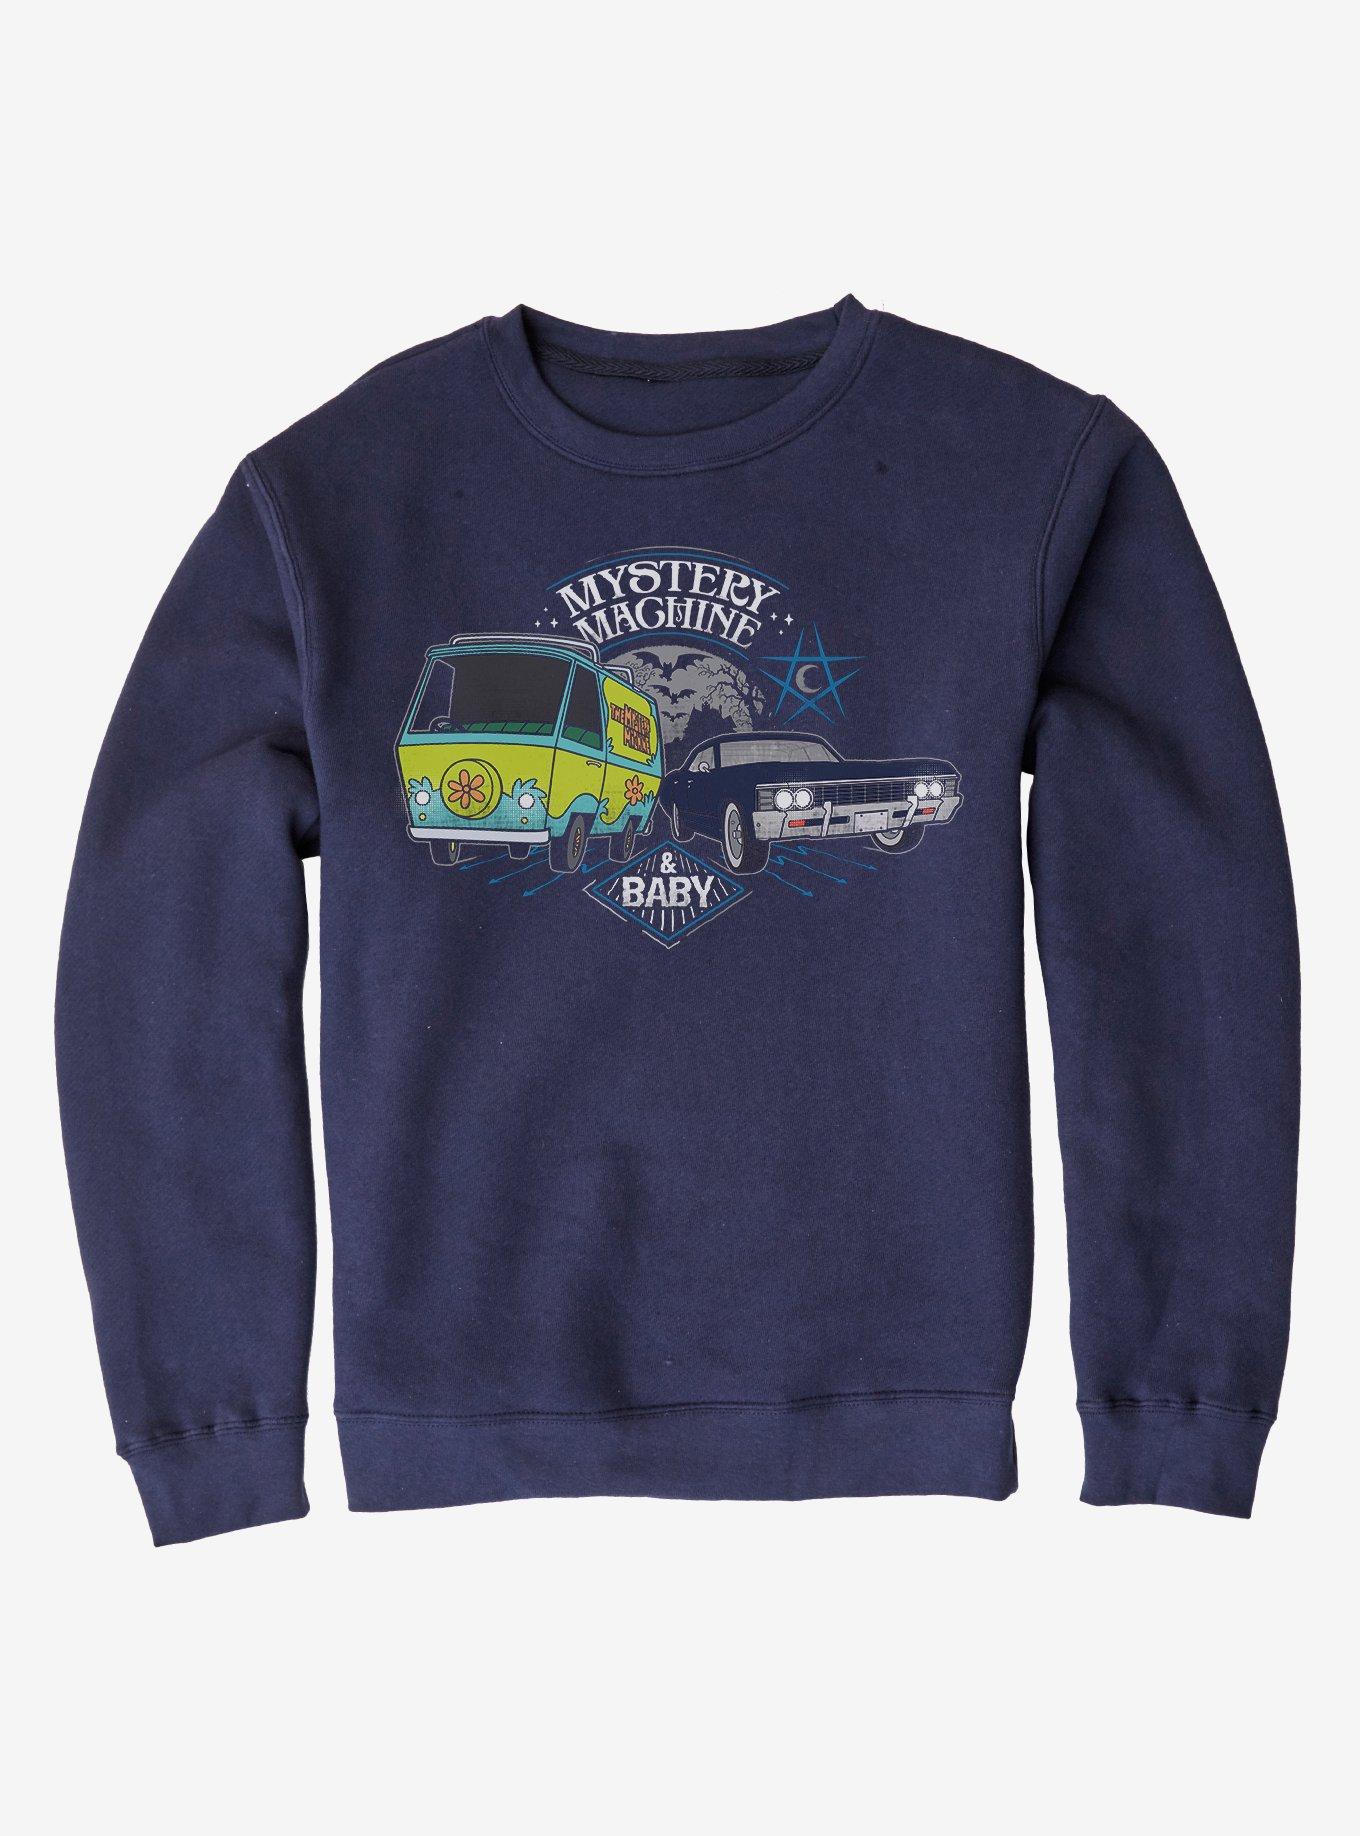 Supernatural Scoobynatural Mystery Machine Sweatshirt, NAVY, hi-res